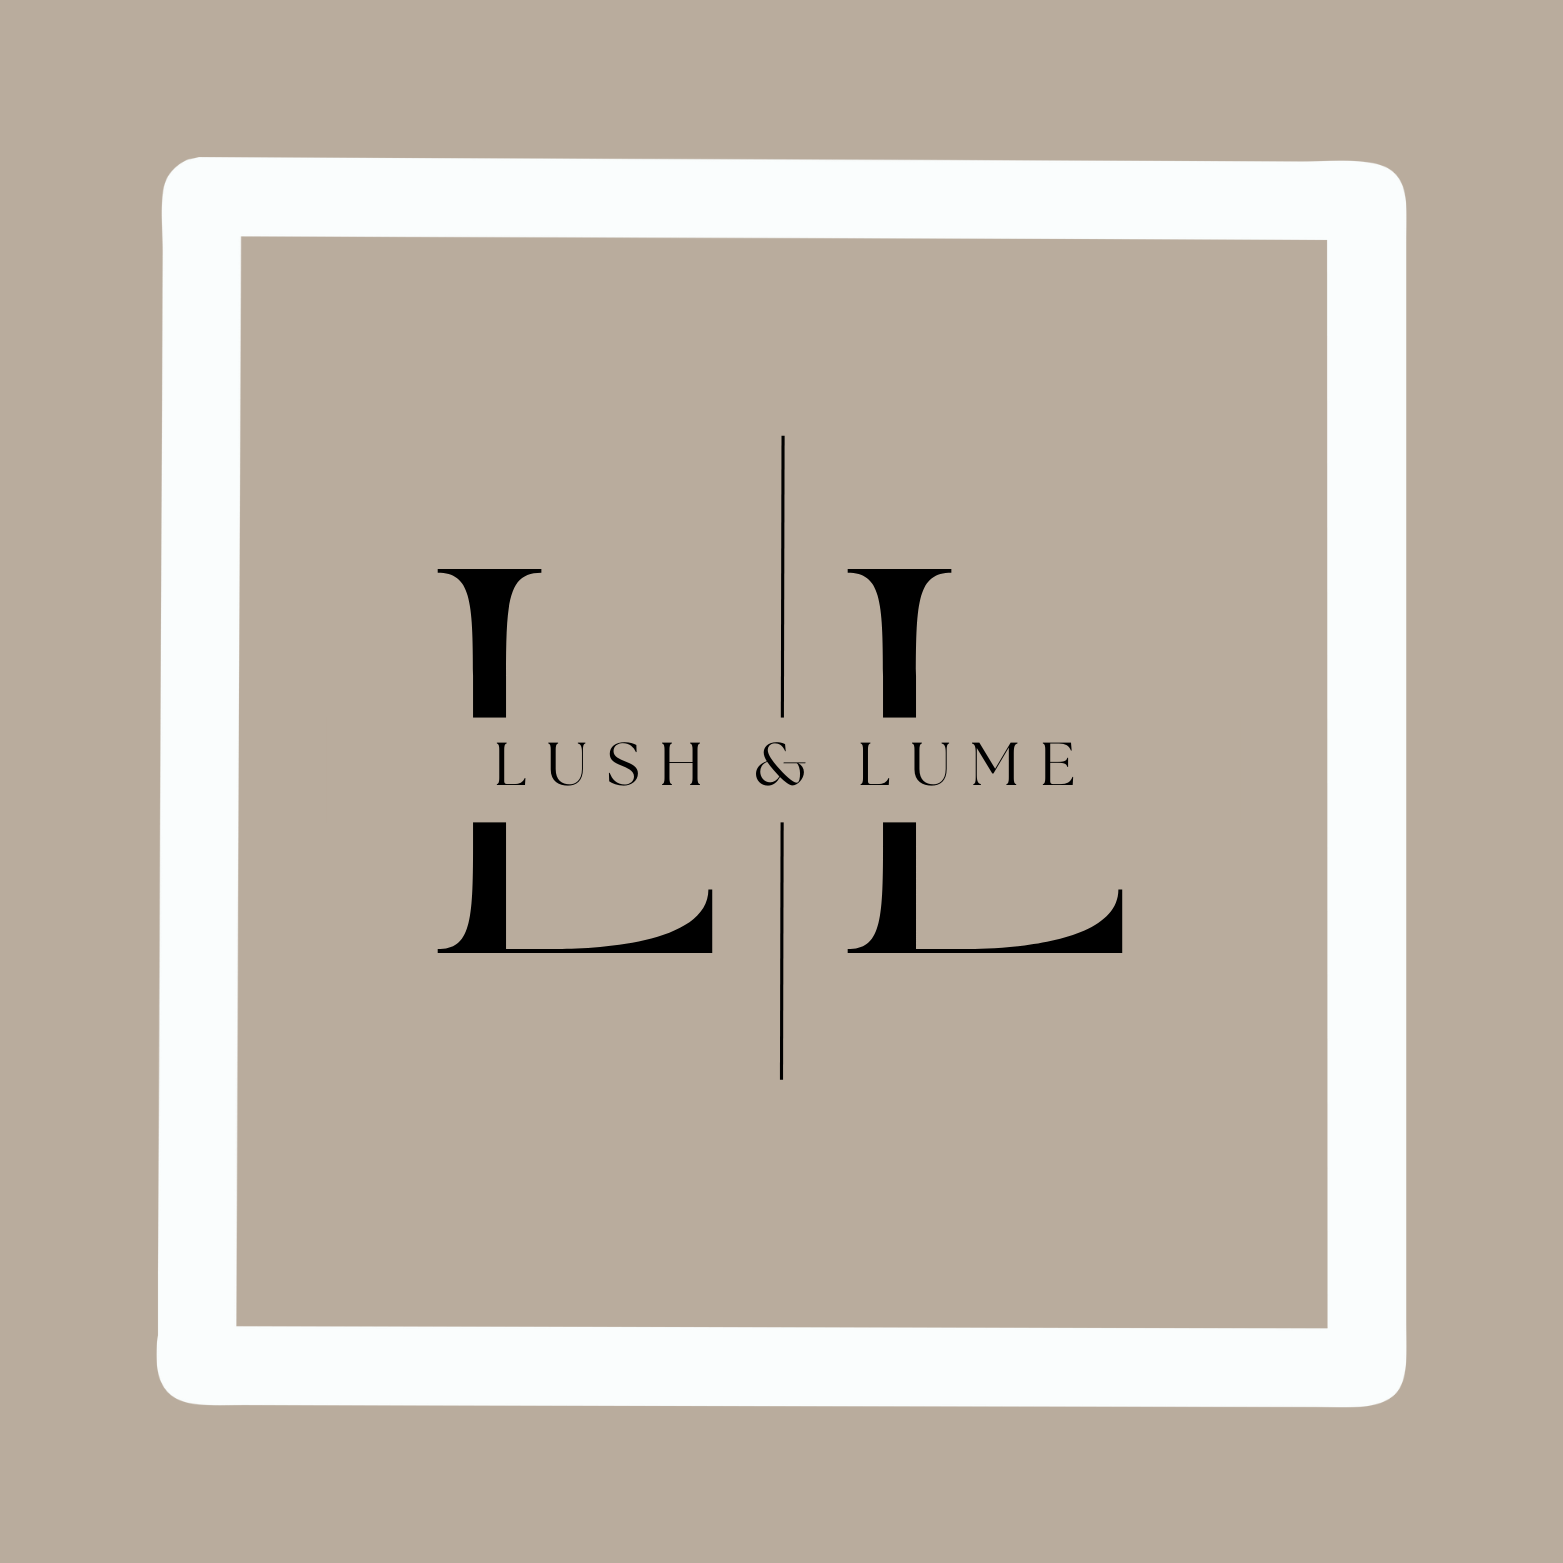 Lush and Lume